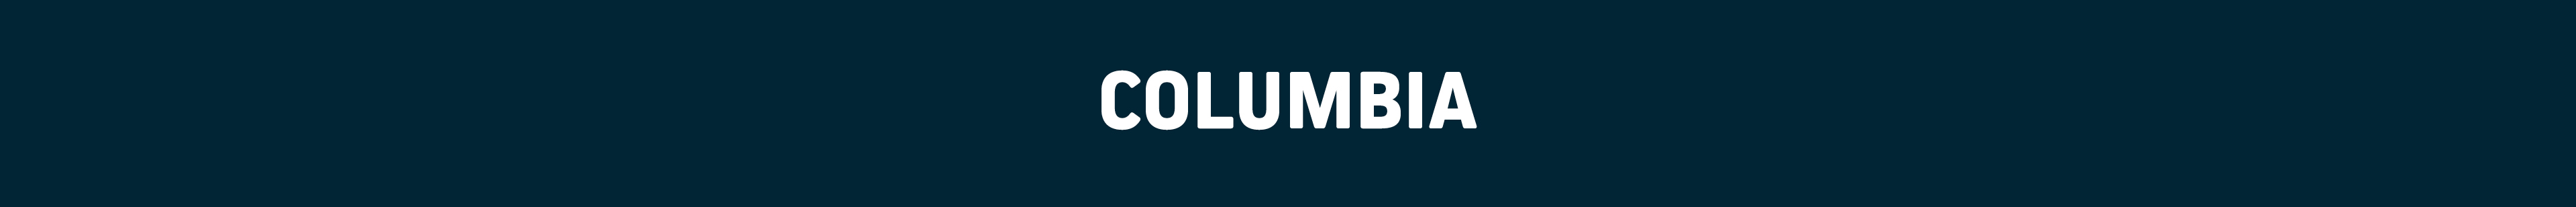 Columbia.jpg